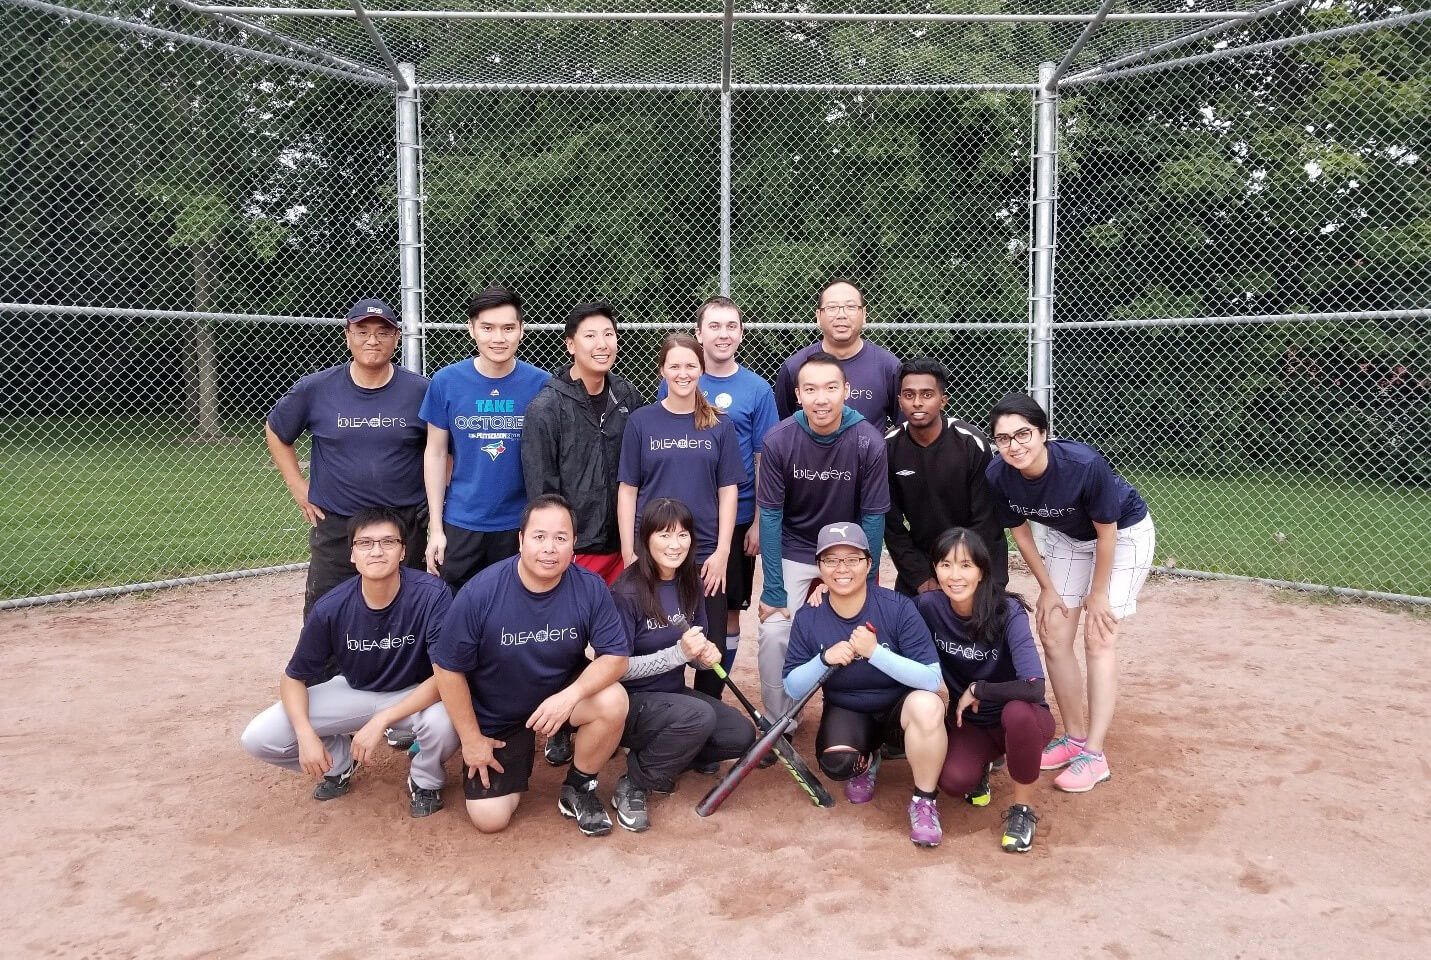 LEA softball team after completing 2018 season.